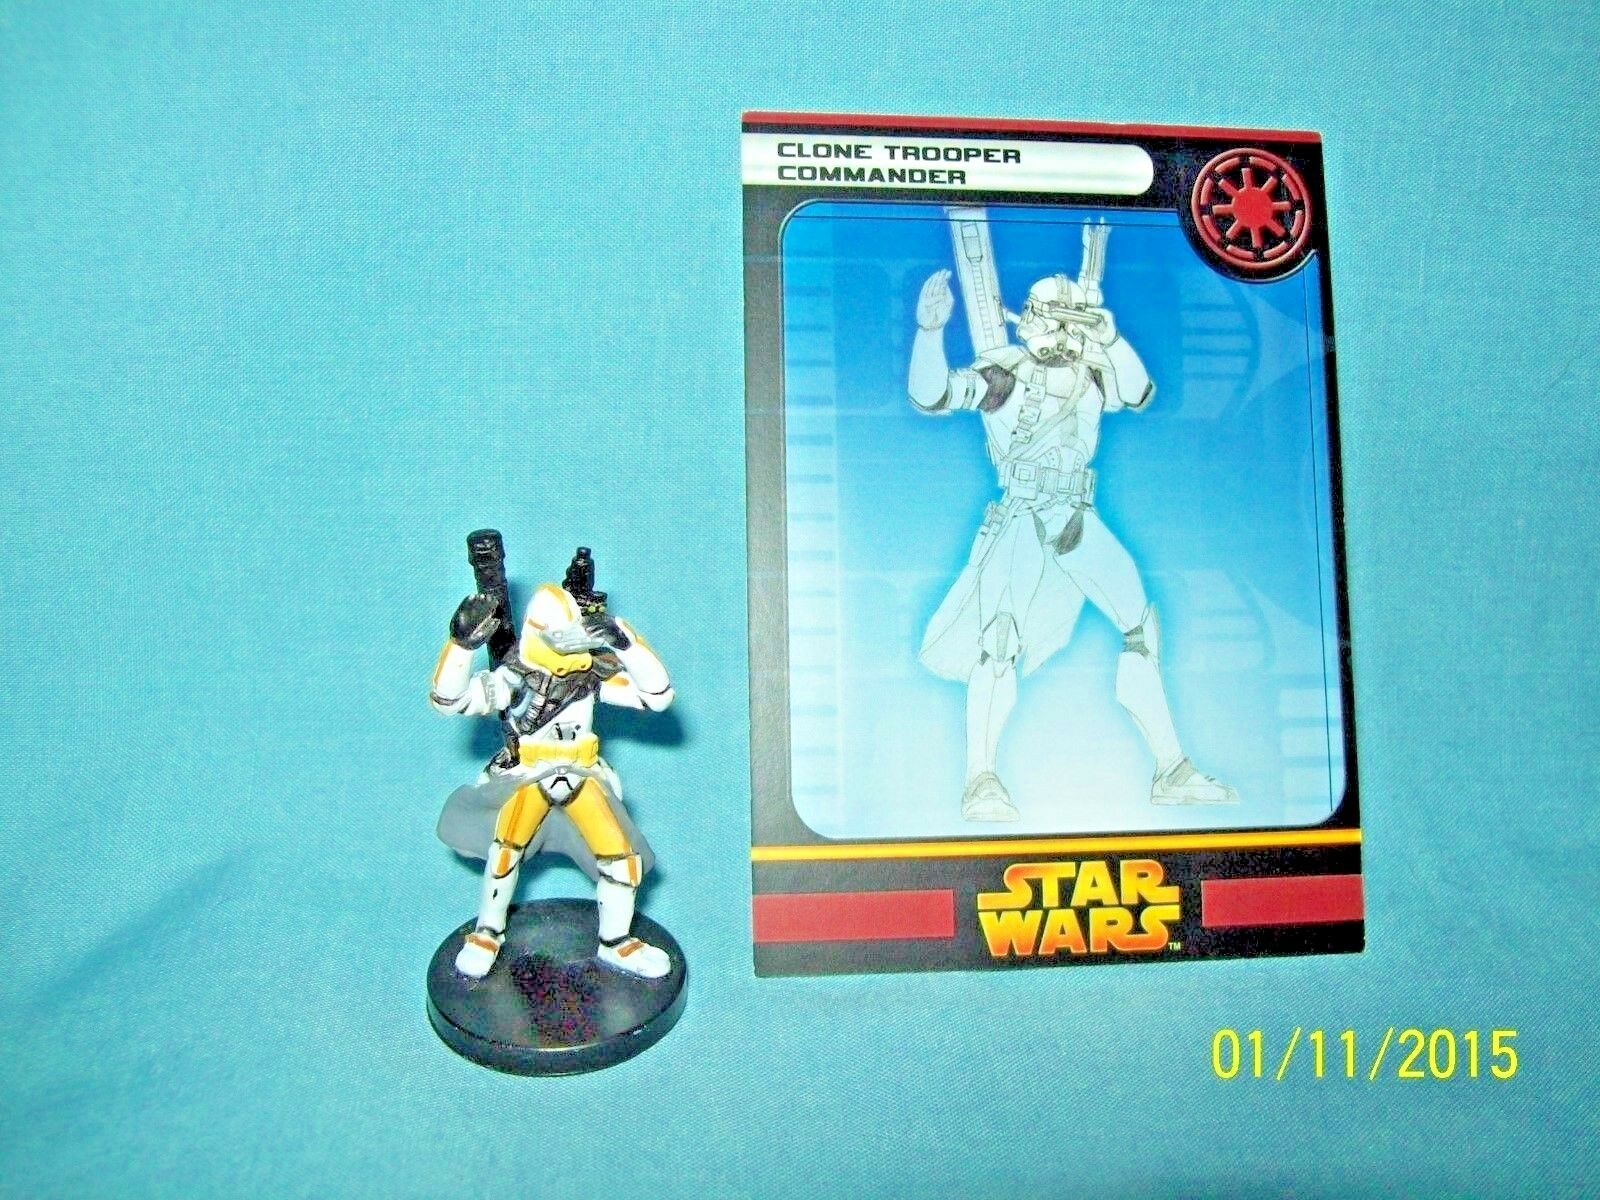 Wotc Star Wars Miniatures Clone Trooper Commander, Rots 10/60, Republic,uncommon